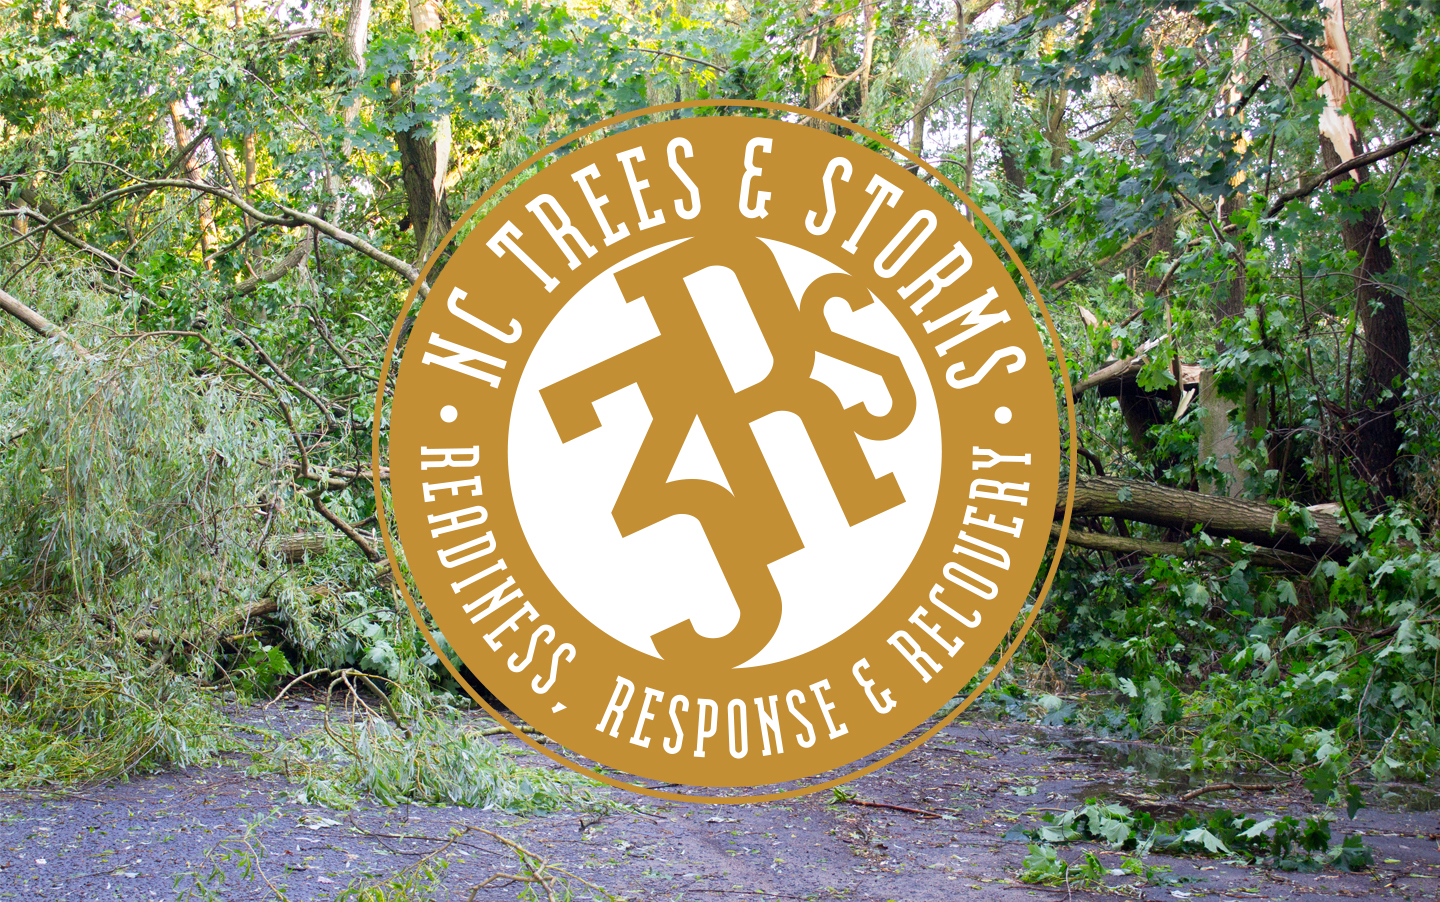 3Rs branding over storm damage image